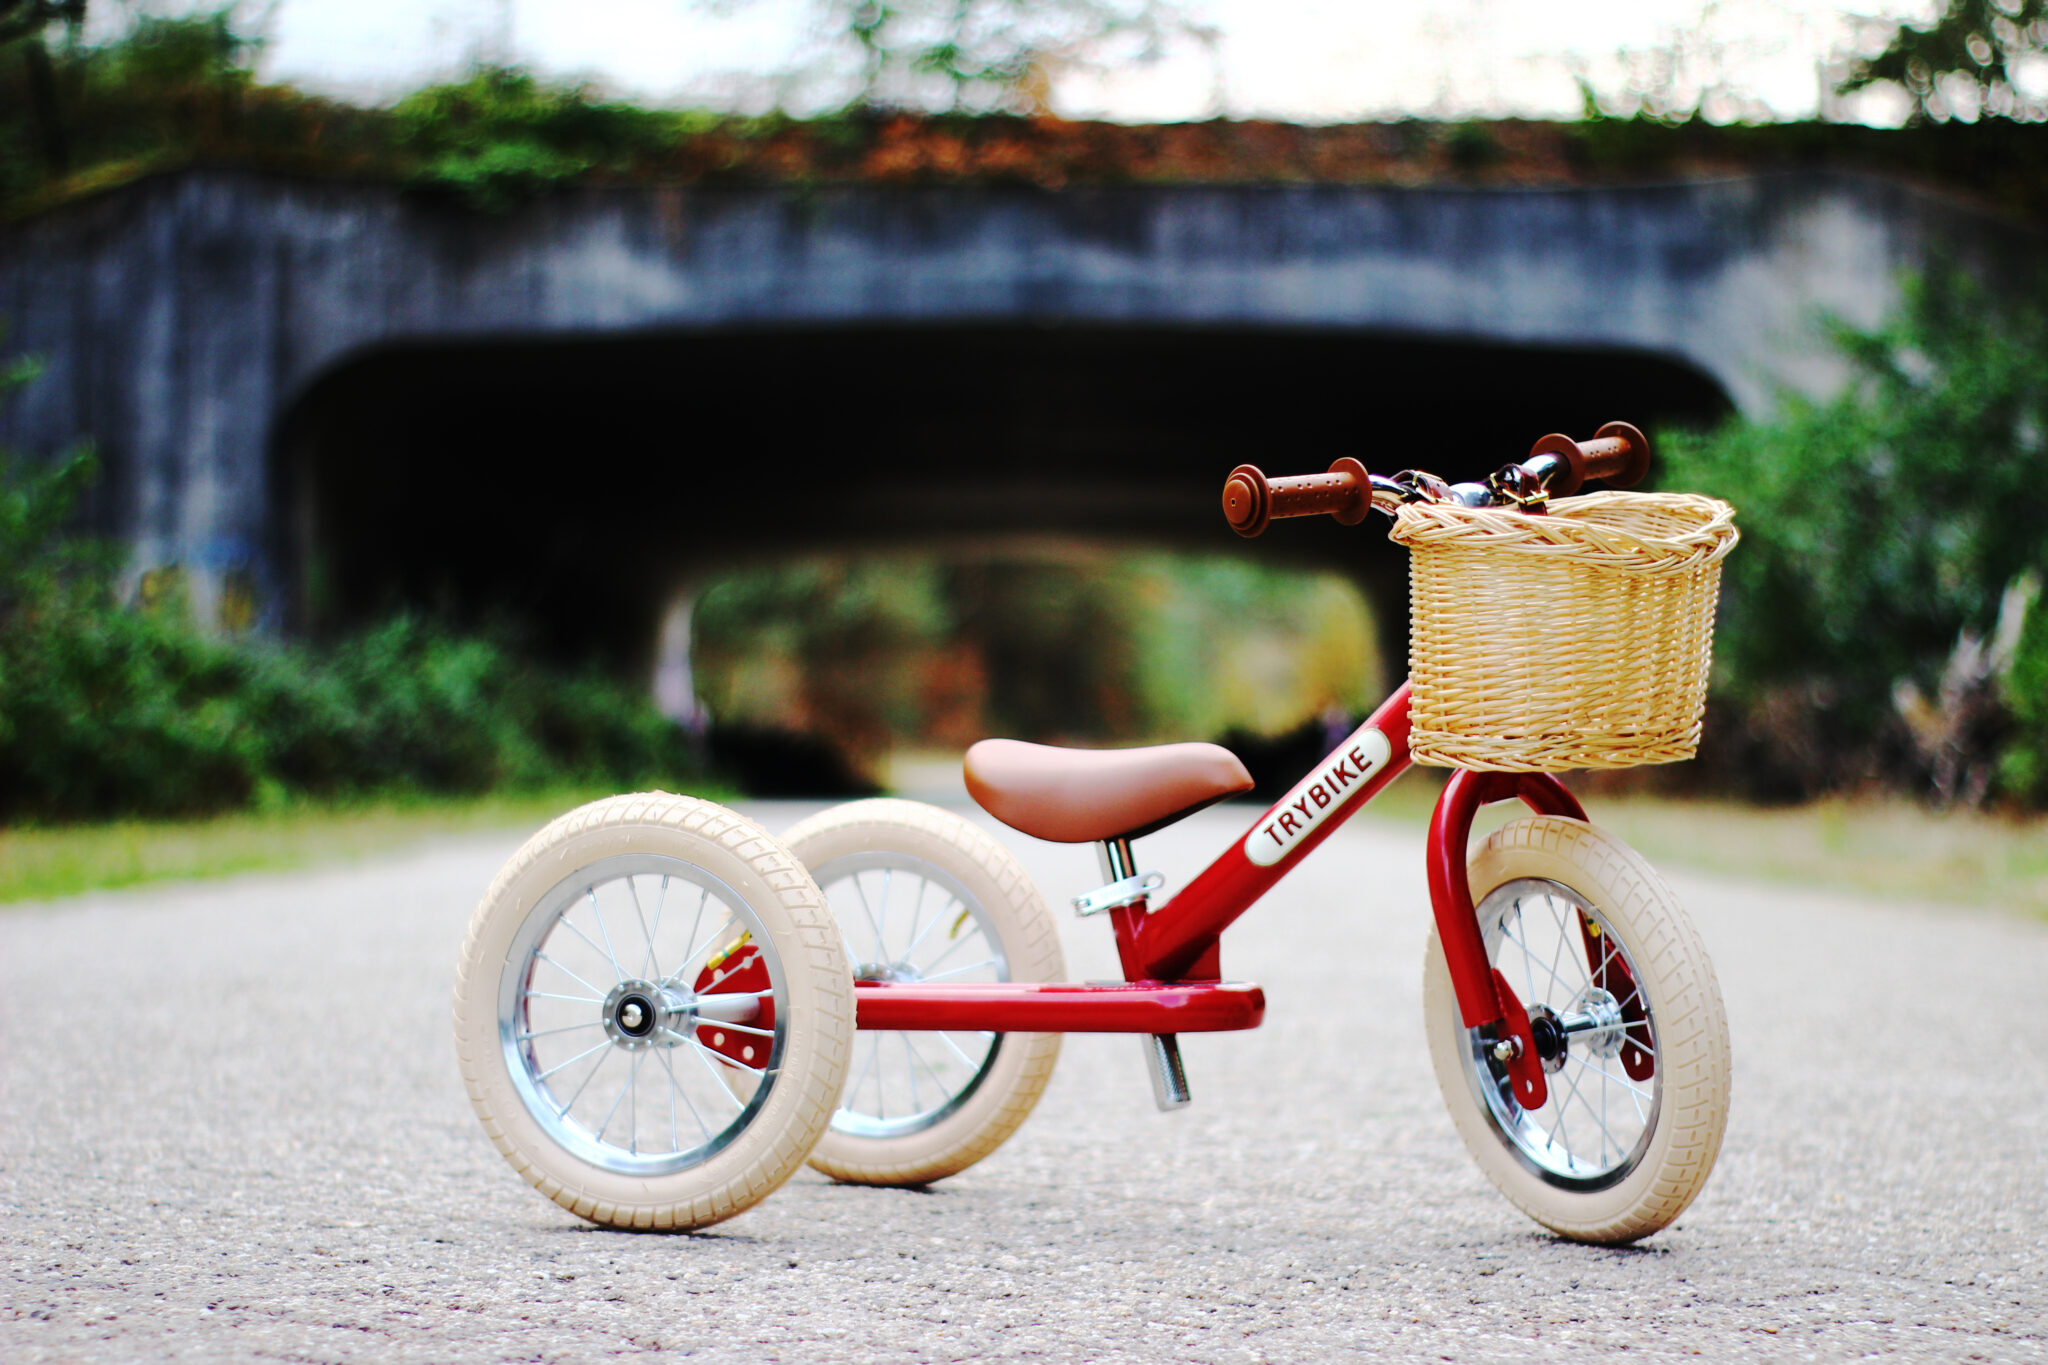 Trybike trehjulet løbecykel Tilbud børnecykel 1-2 og 3-6 år.